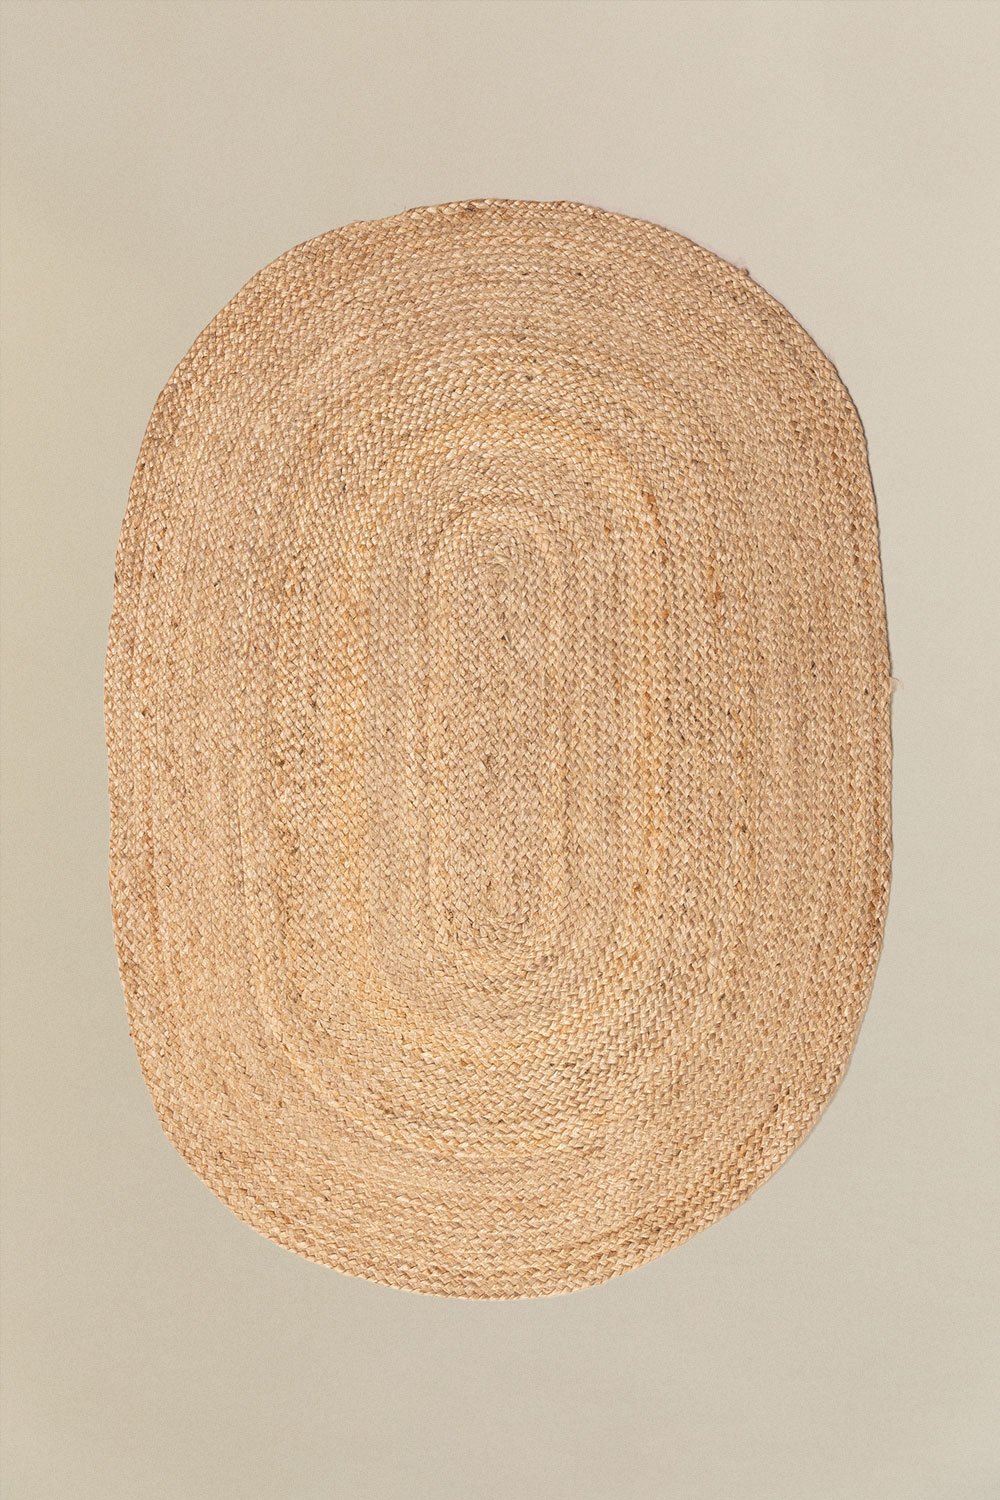 Ovaler Teppich aus Naturjute (141x99,5 cm) Tempo, Galeriebild 1